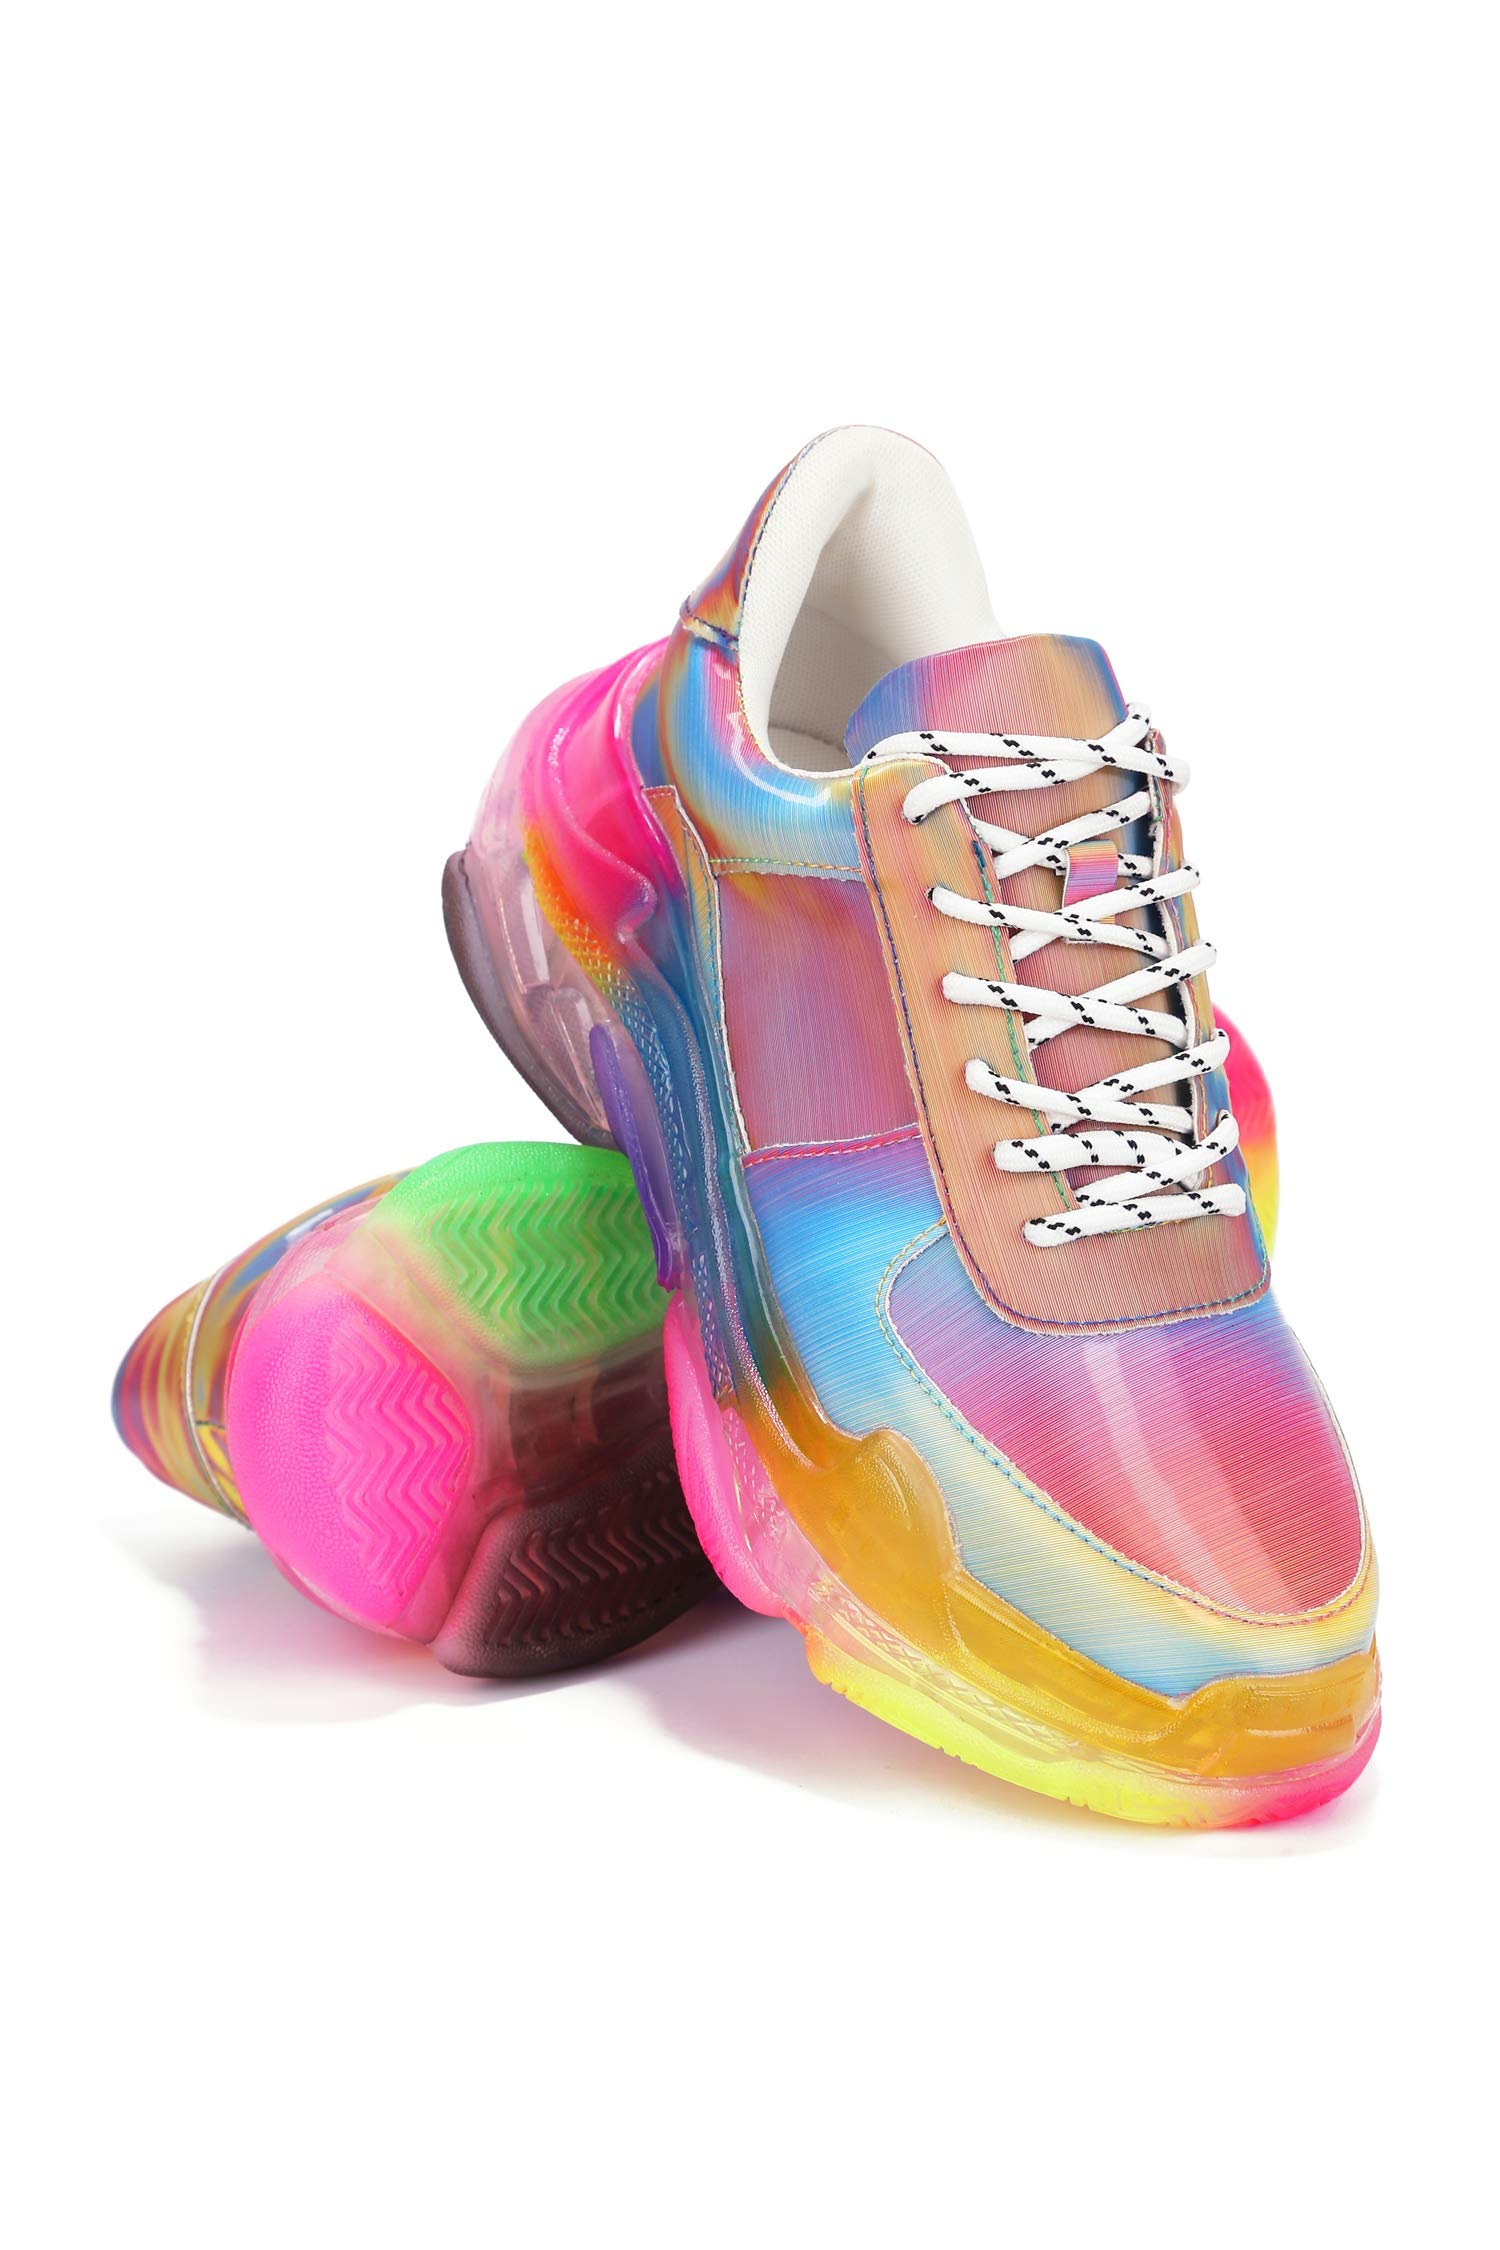 Cape Robbin Womens Lace Up Sneaker,Rainbow,10